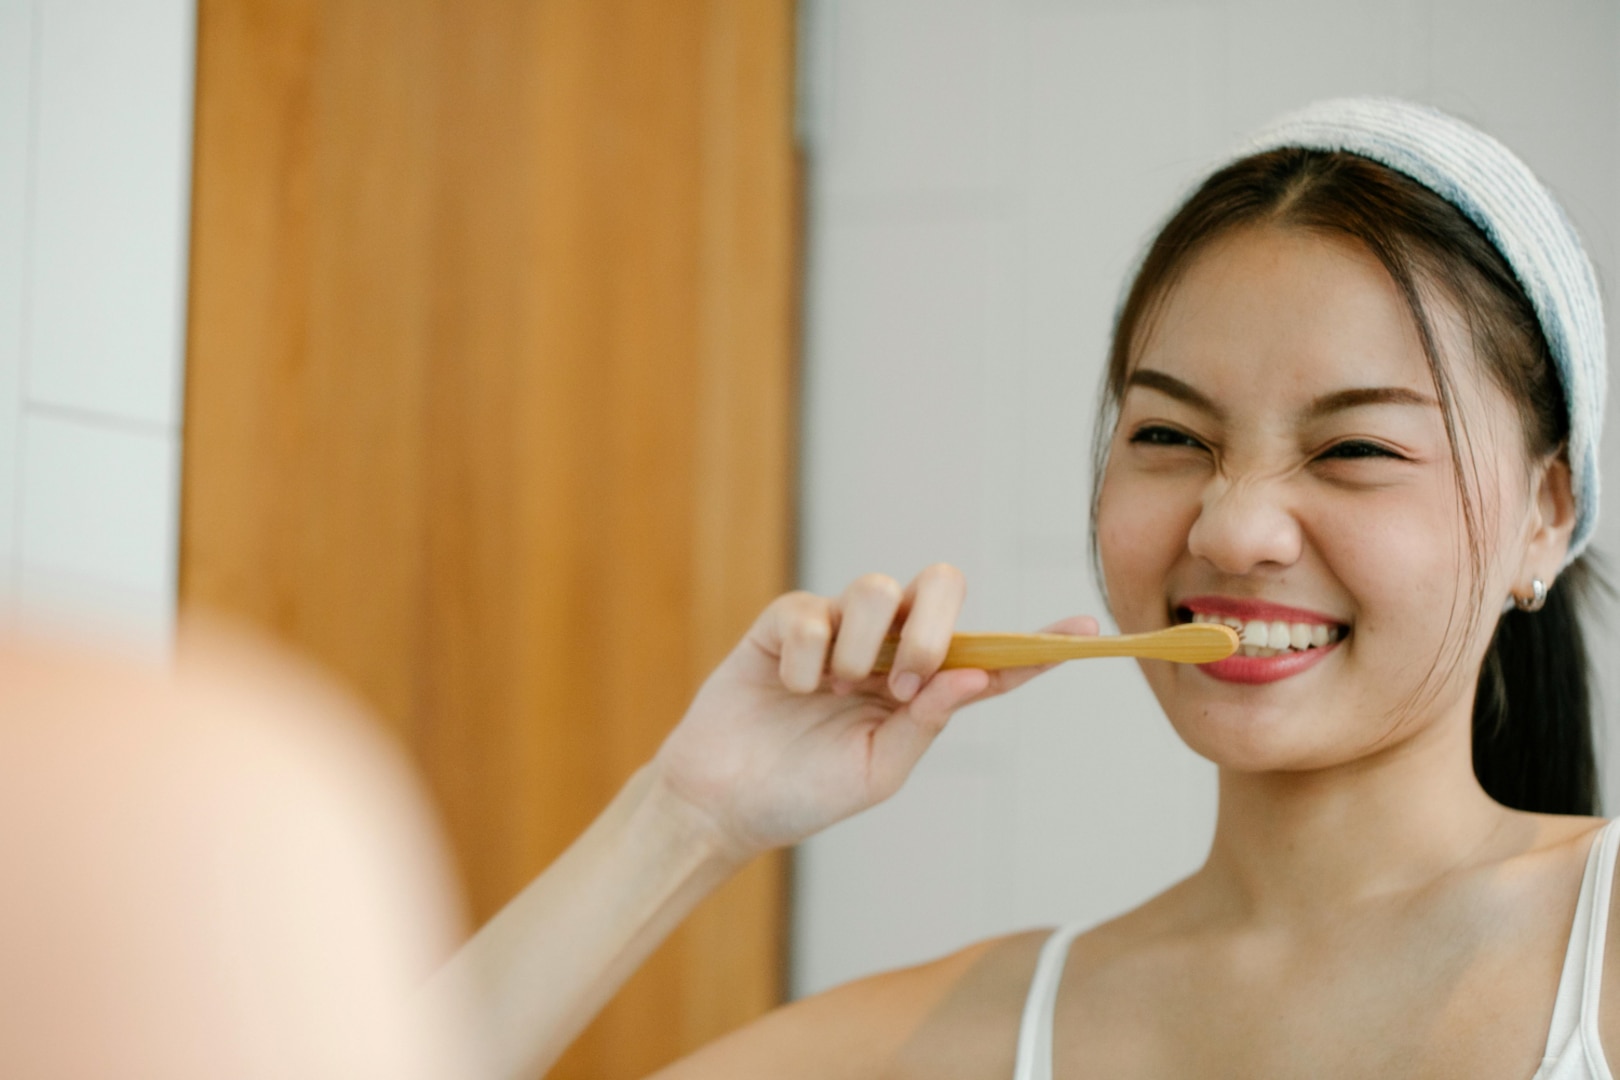 Woman wearing white headband looks in mirror while brushing teeth.